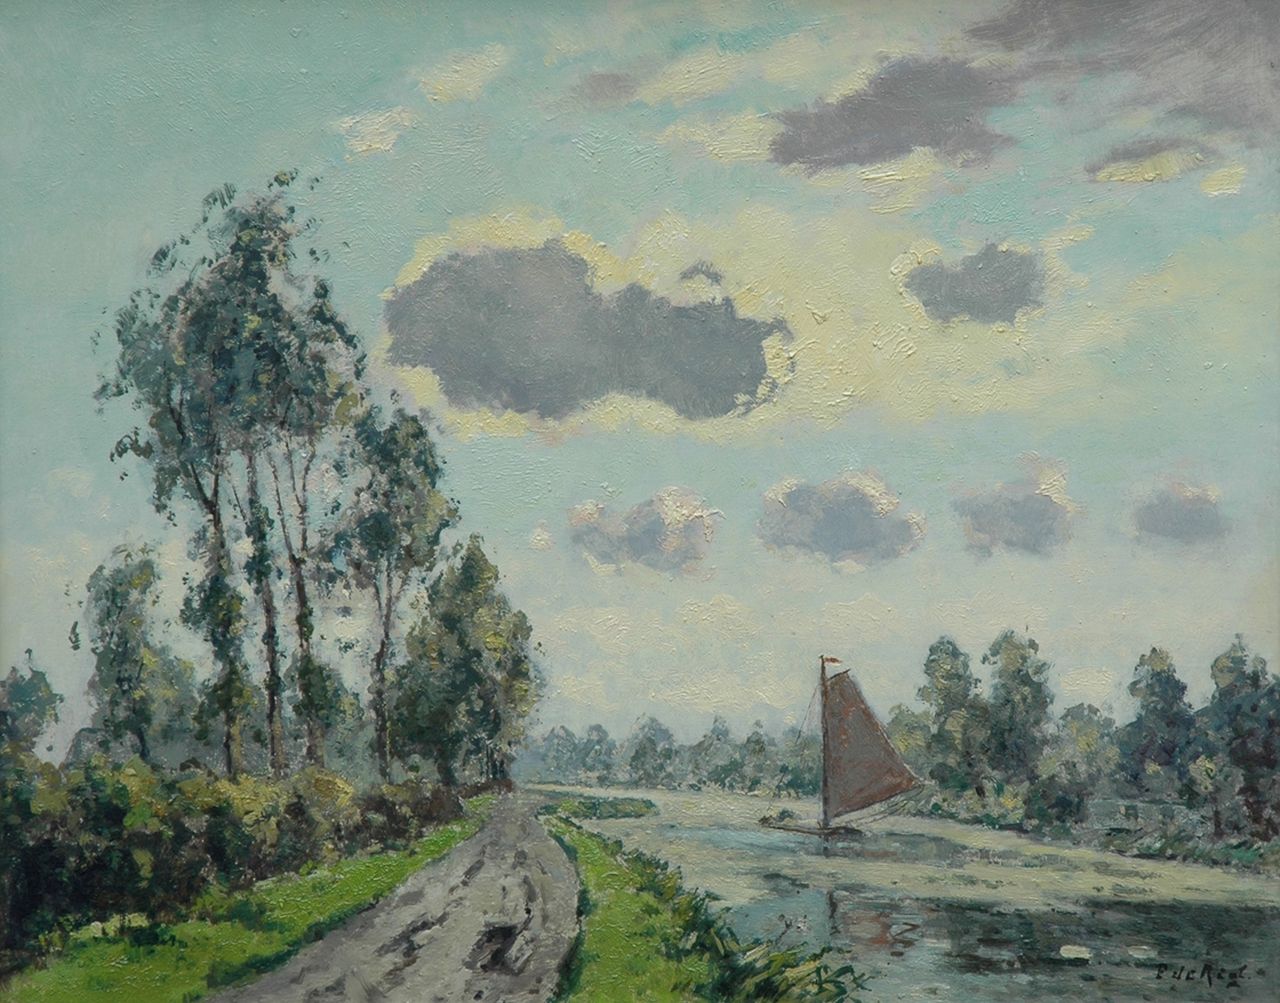 Regt P. de | Pieter 'Piet' de Regt, Along the Vliet near Voorschoten, oil on canvas 40.3 x 50.5 cm, signed l.r.